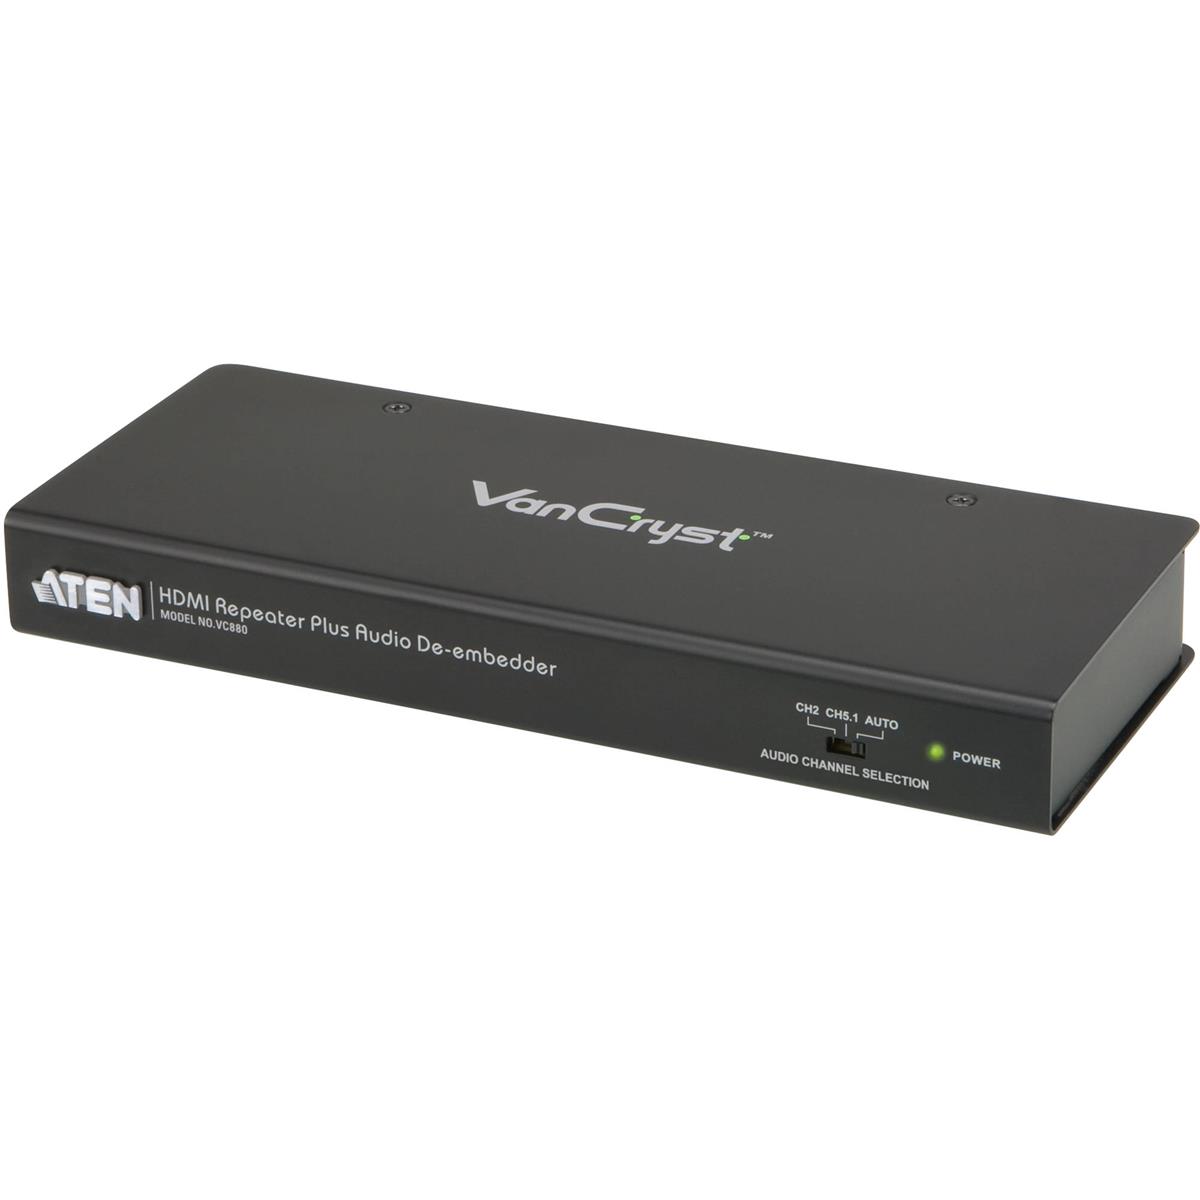 

Aten VC880 HDMI Repeater Plus Audio De-embedder